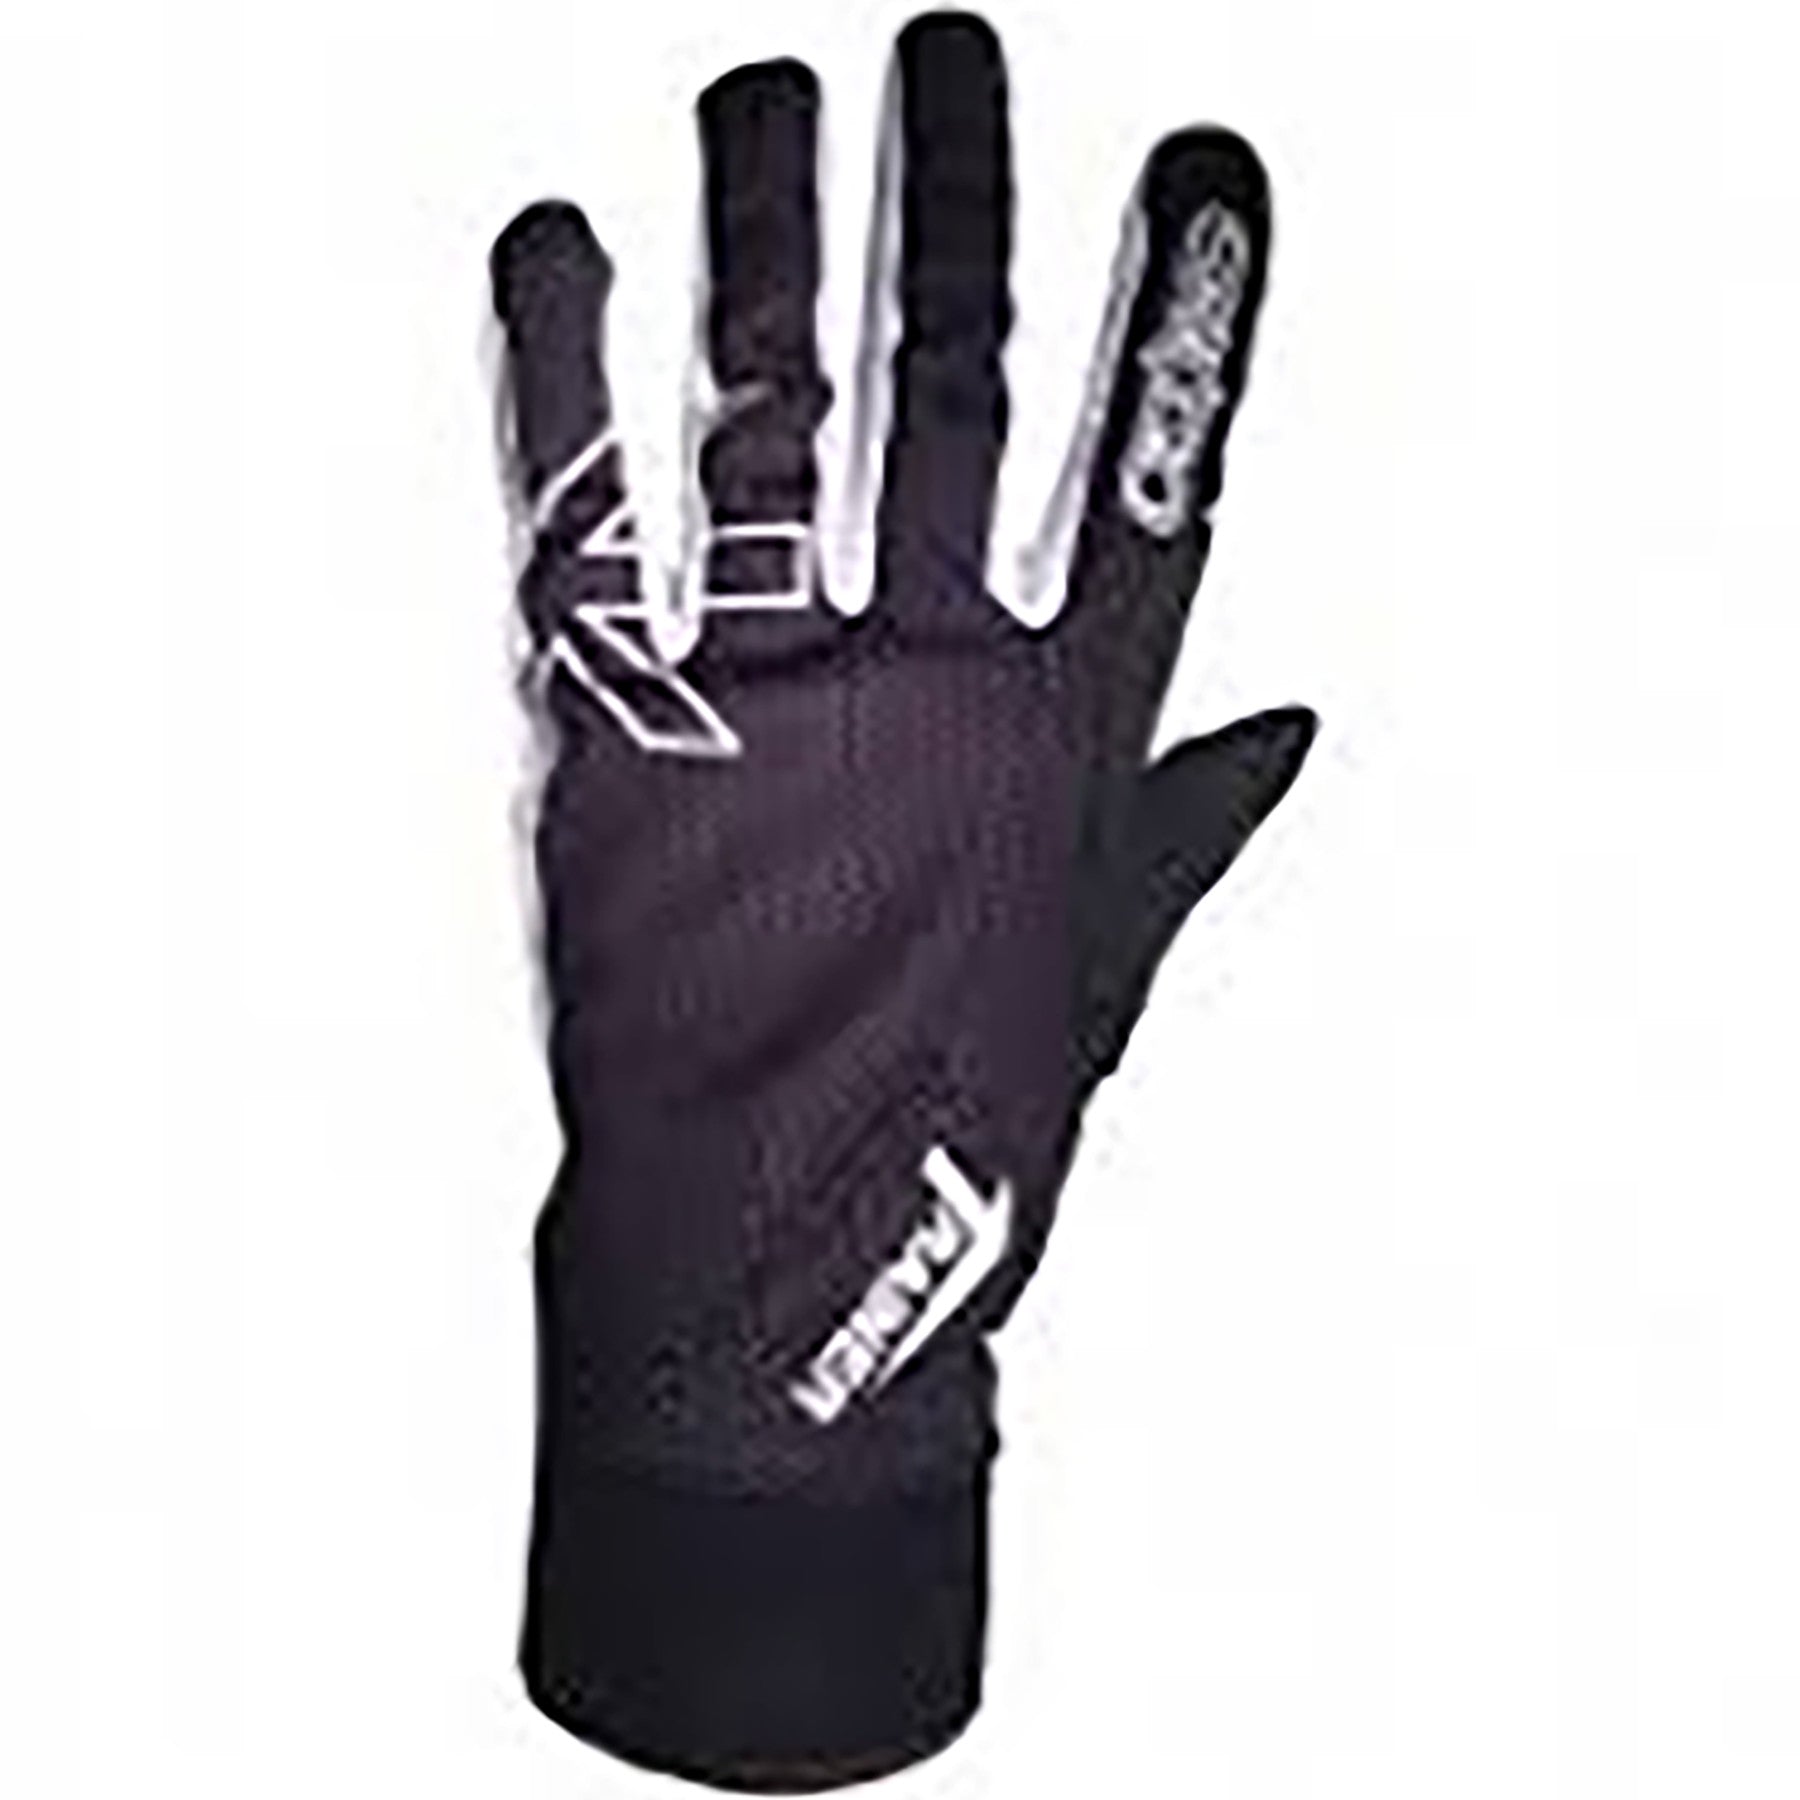 SkiGo Trainer Glove